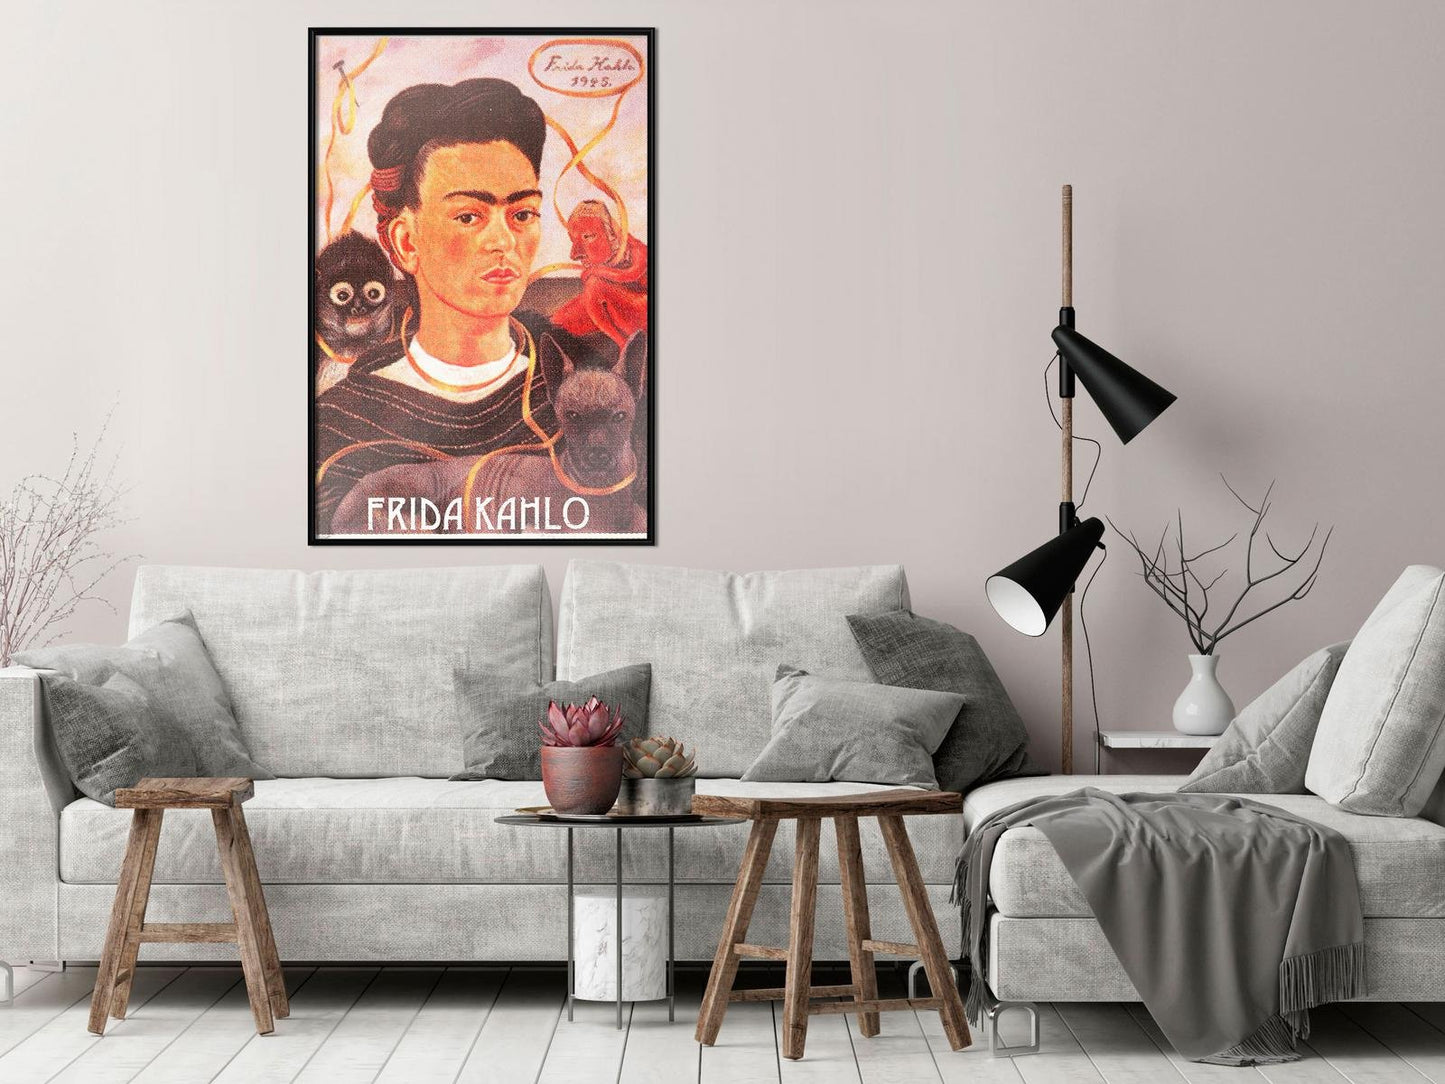 Frida Khalo – Self Portrait